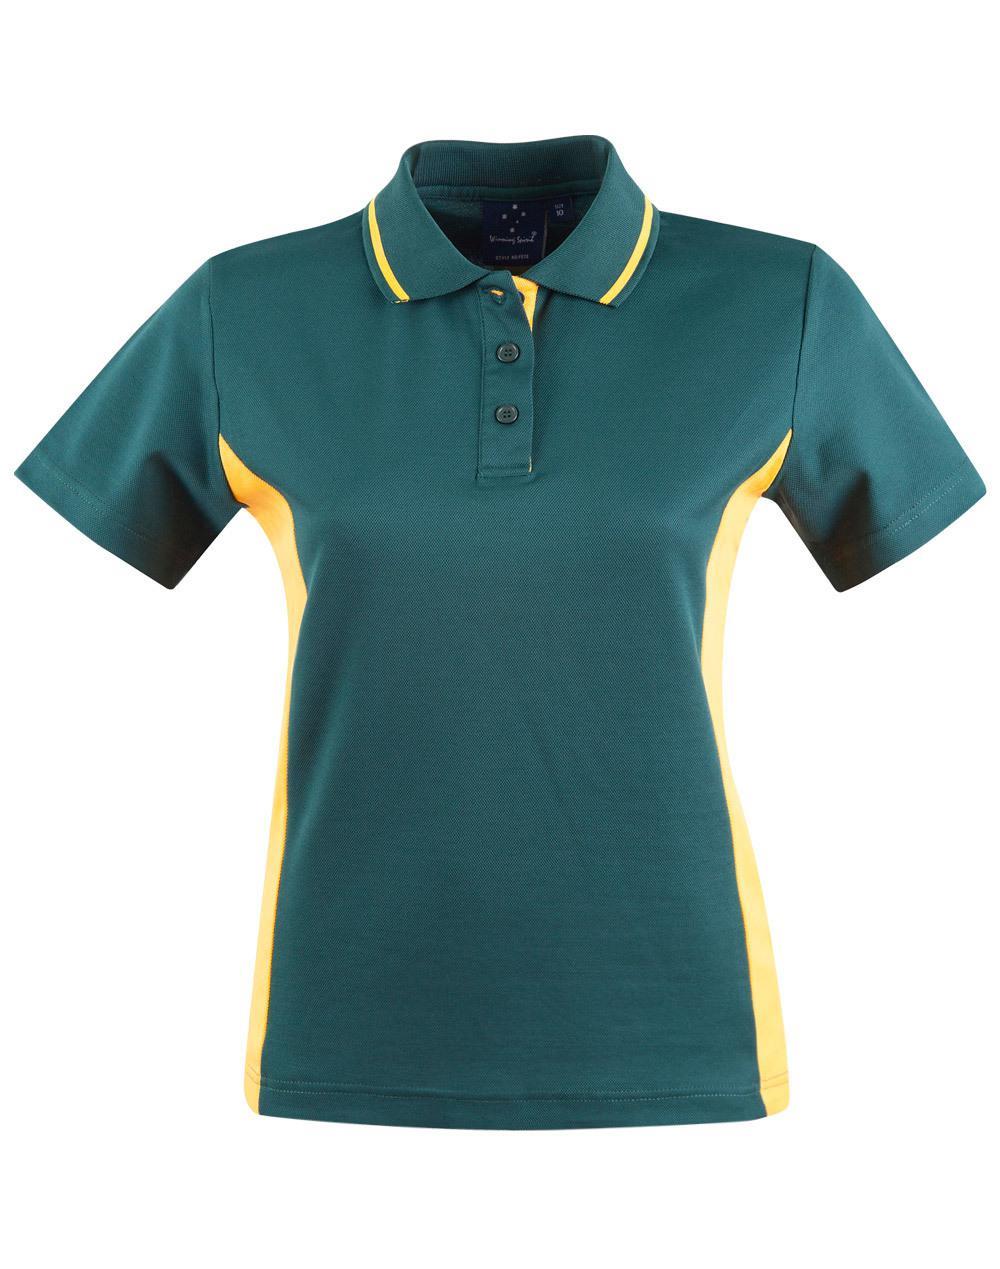 PS74 Sz 08 TEAMMATE Cotton Polyester Ladies Polo Shirt Bottle Green/Gold